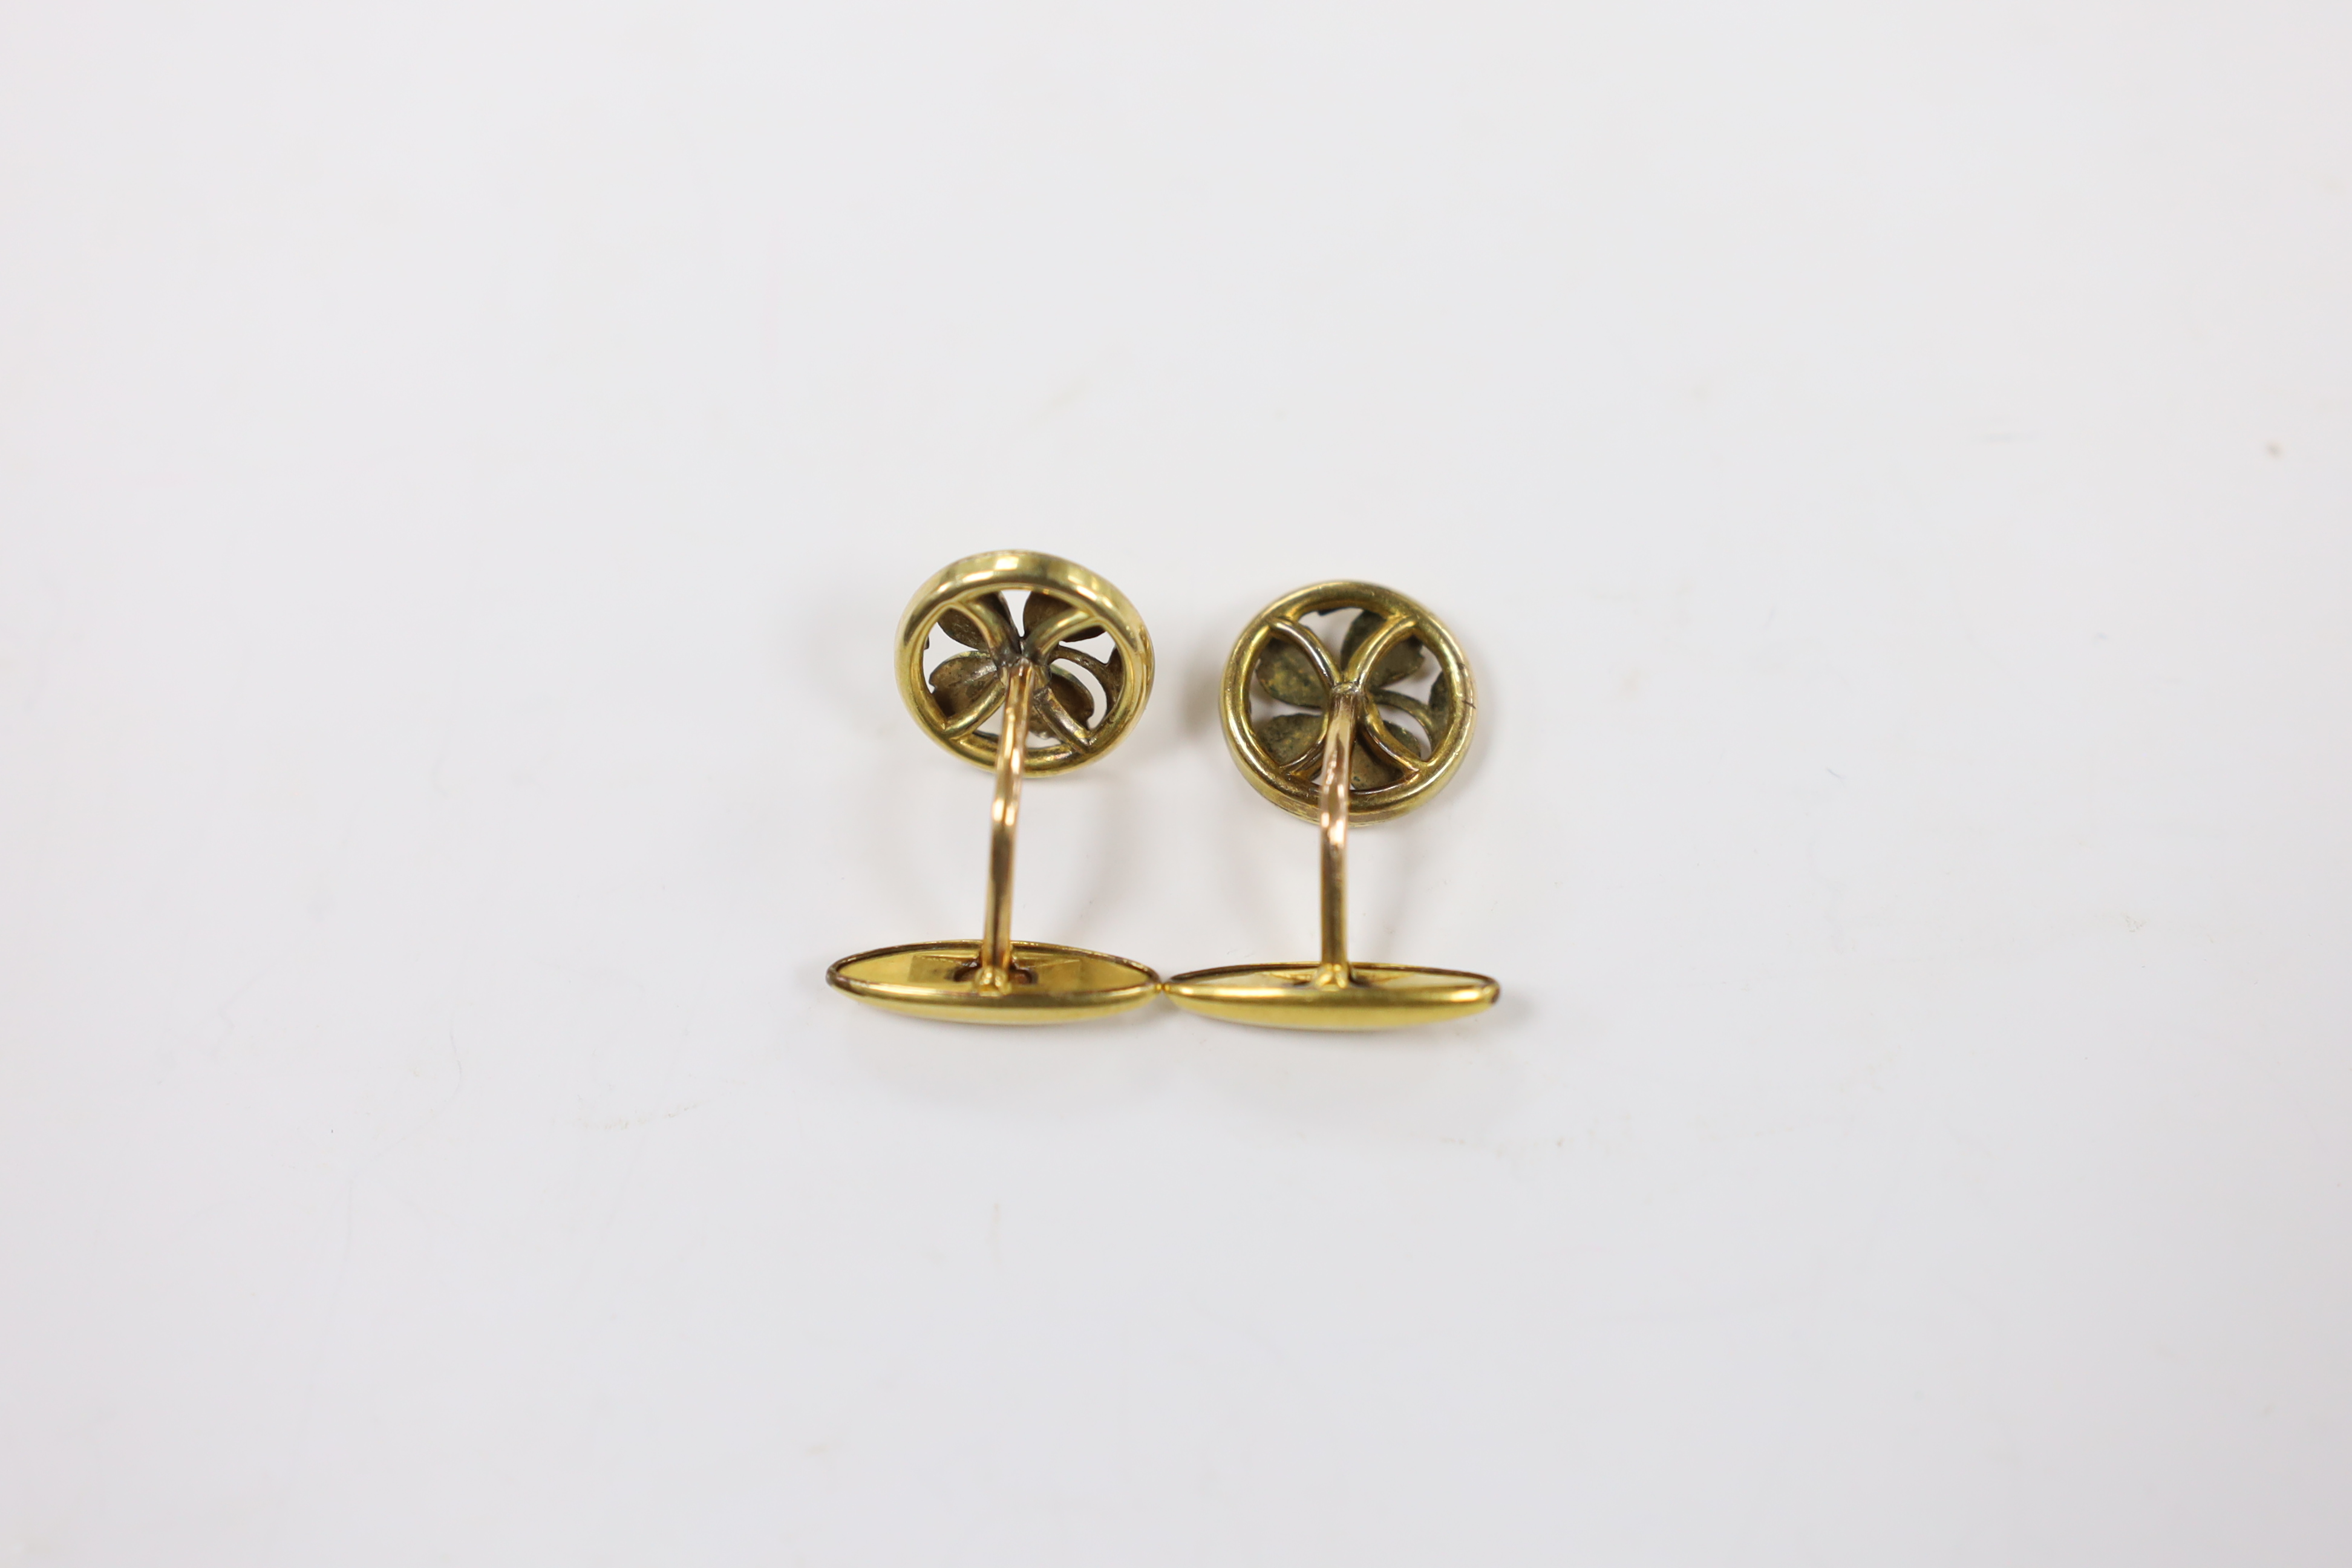 A pair of continental yellow metal overlaid circular cufflinks, of pierced foliate form, 14mm.